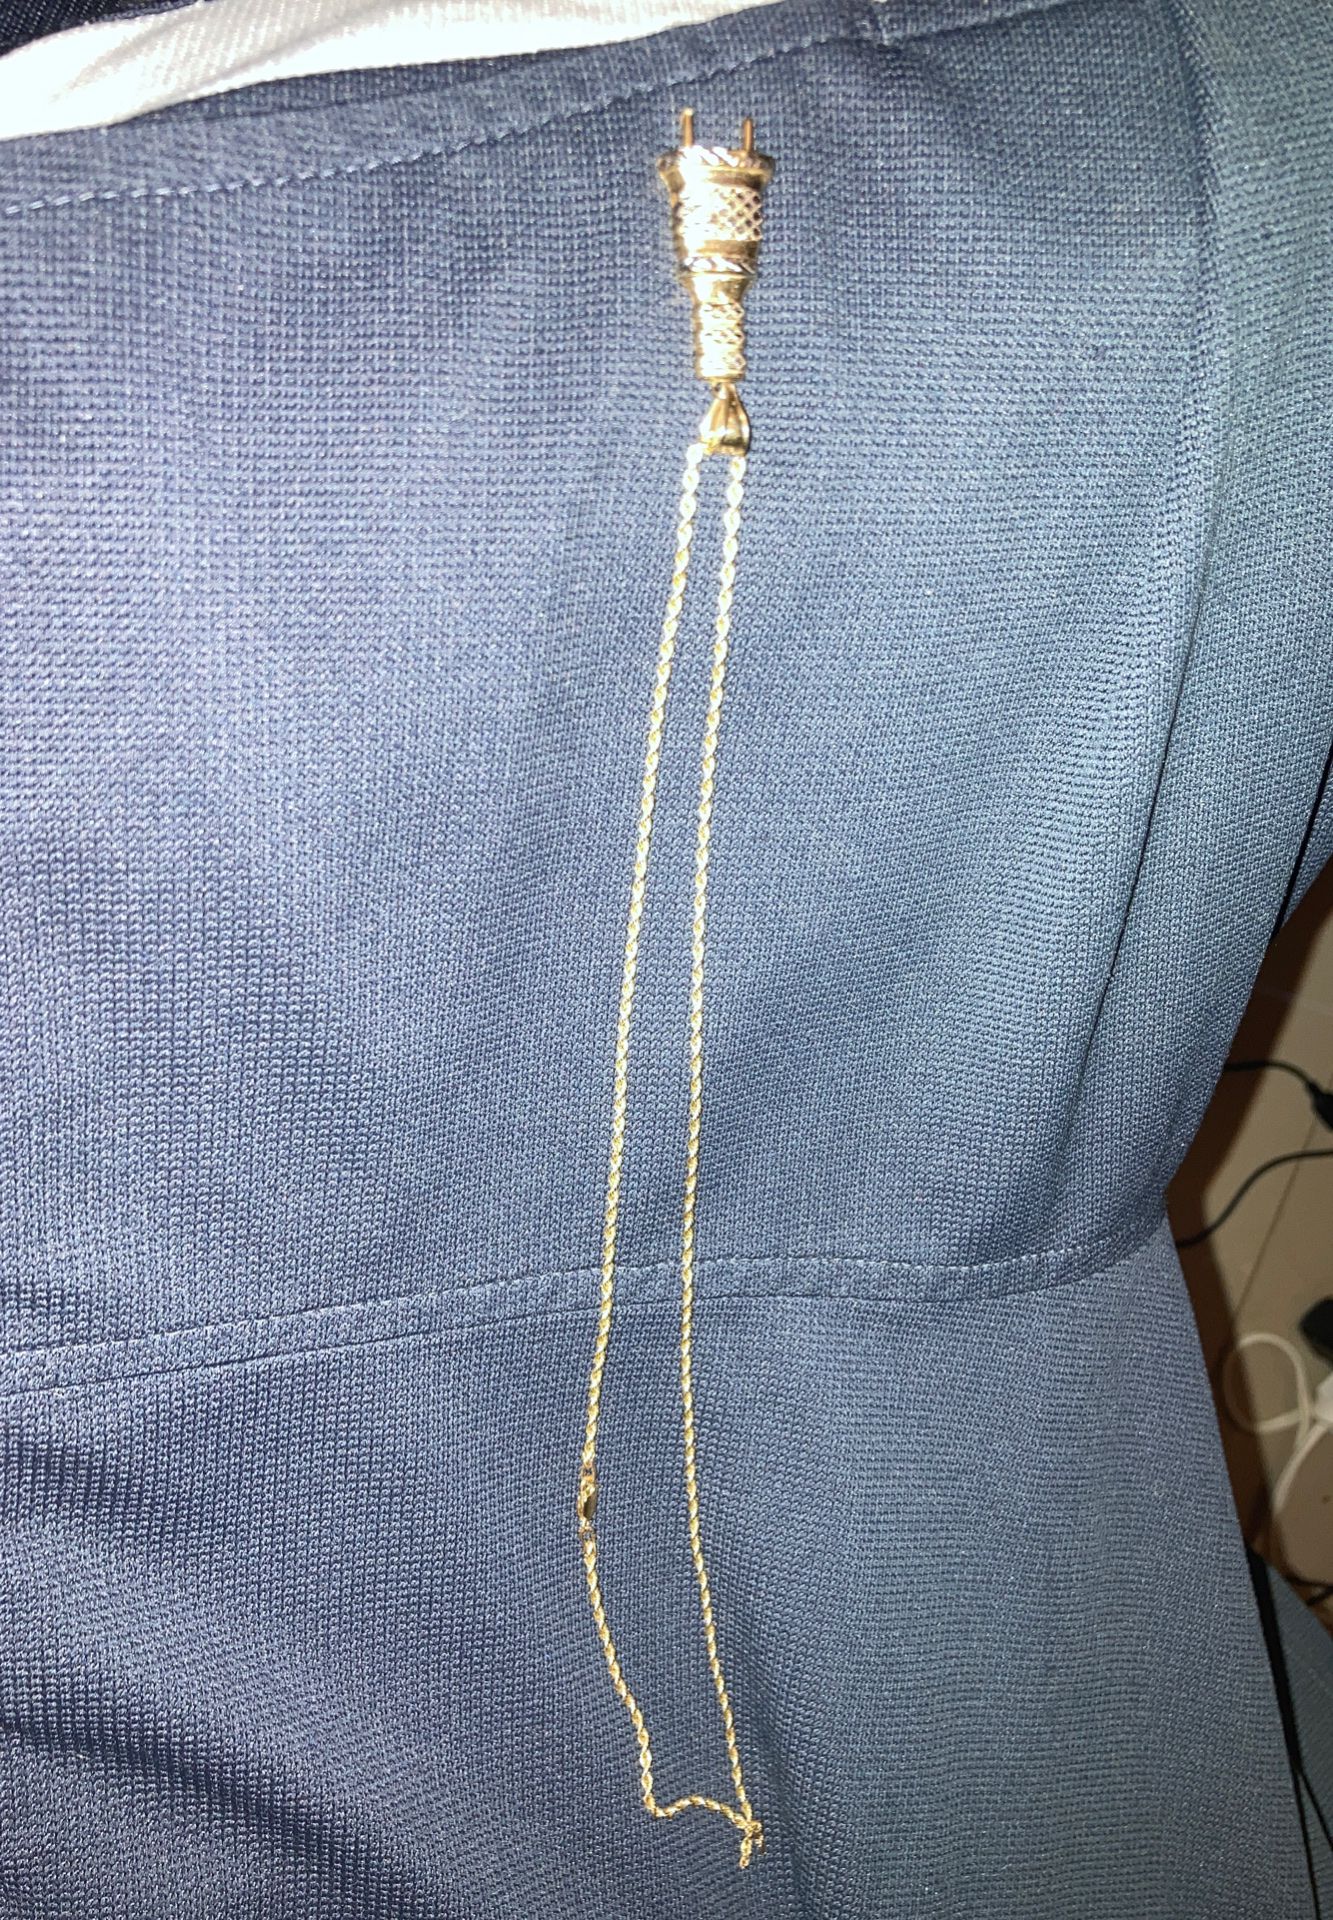 10k chain and plug pendant broken